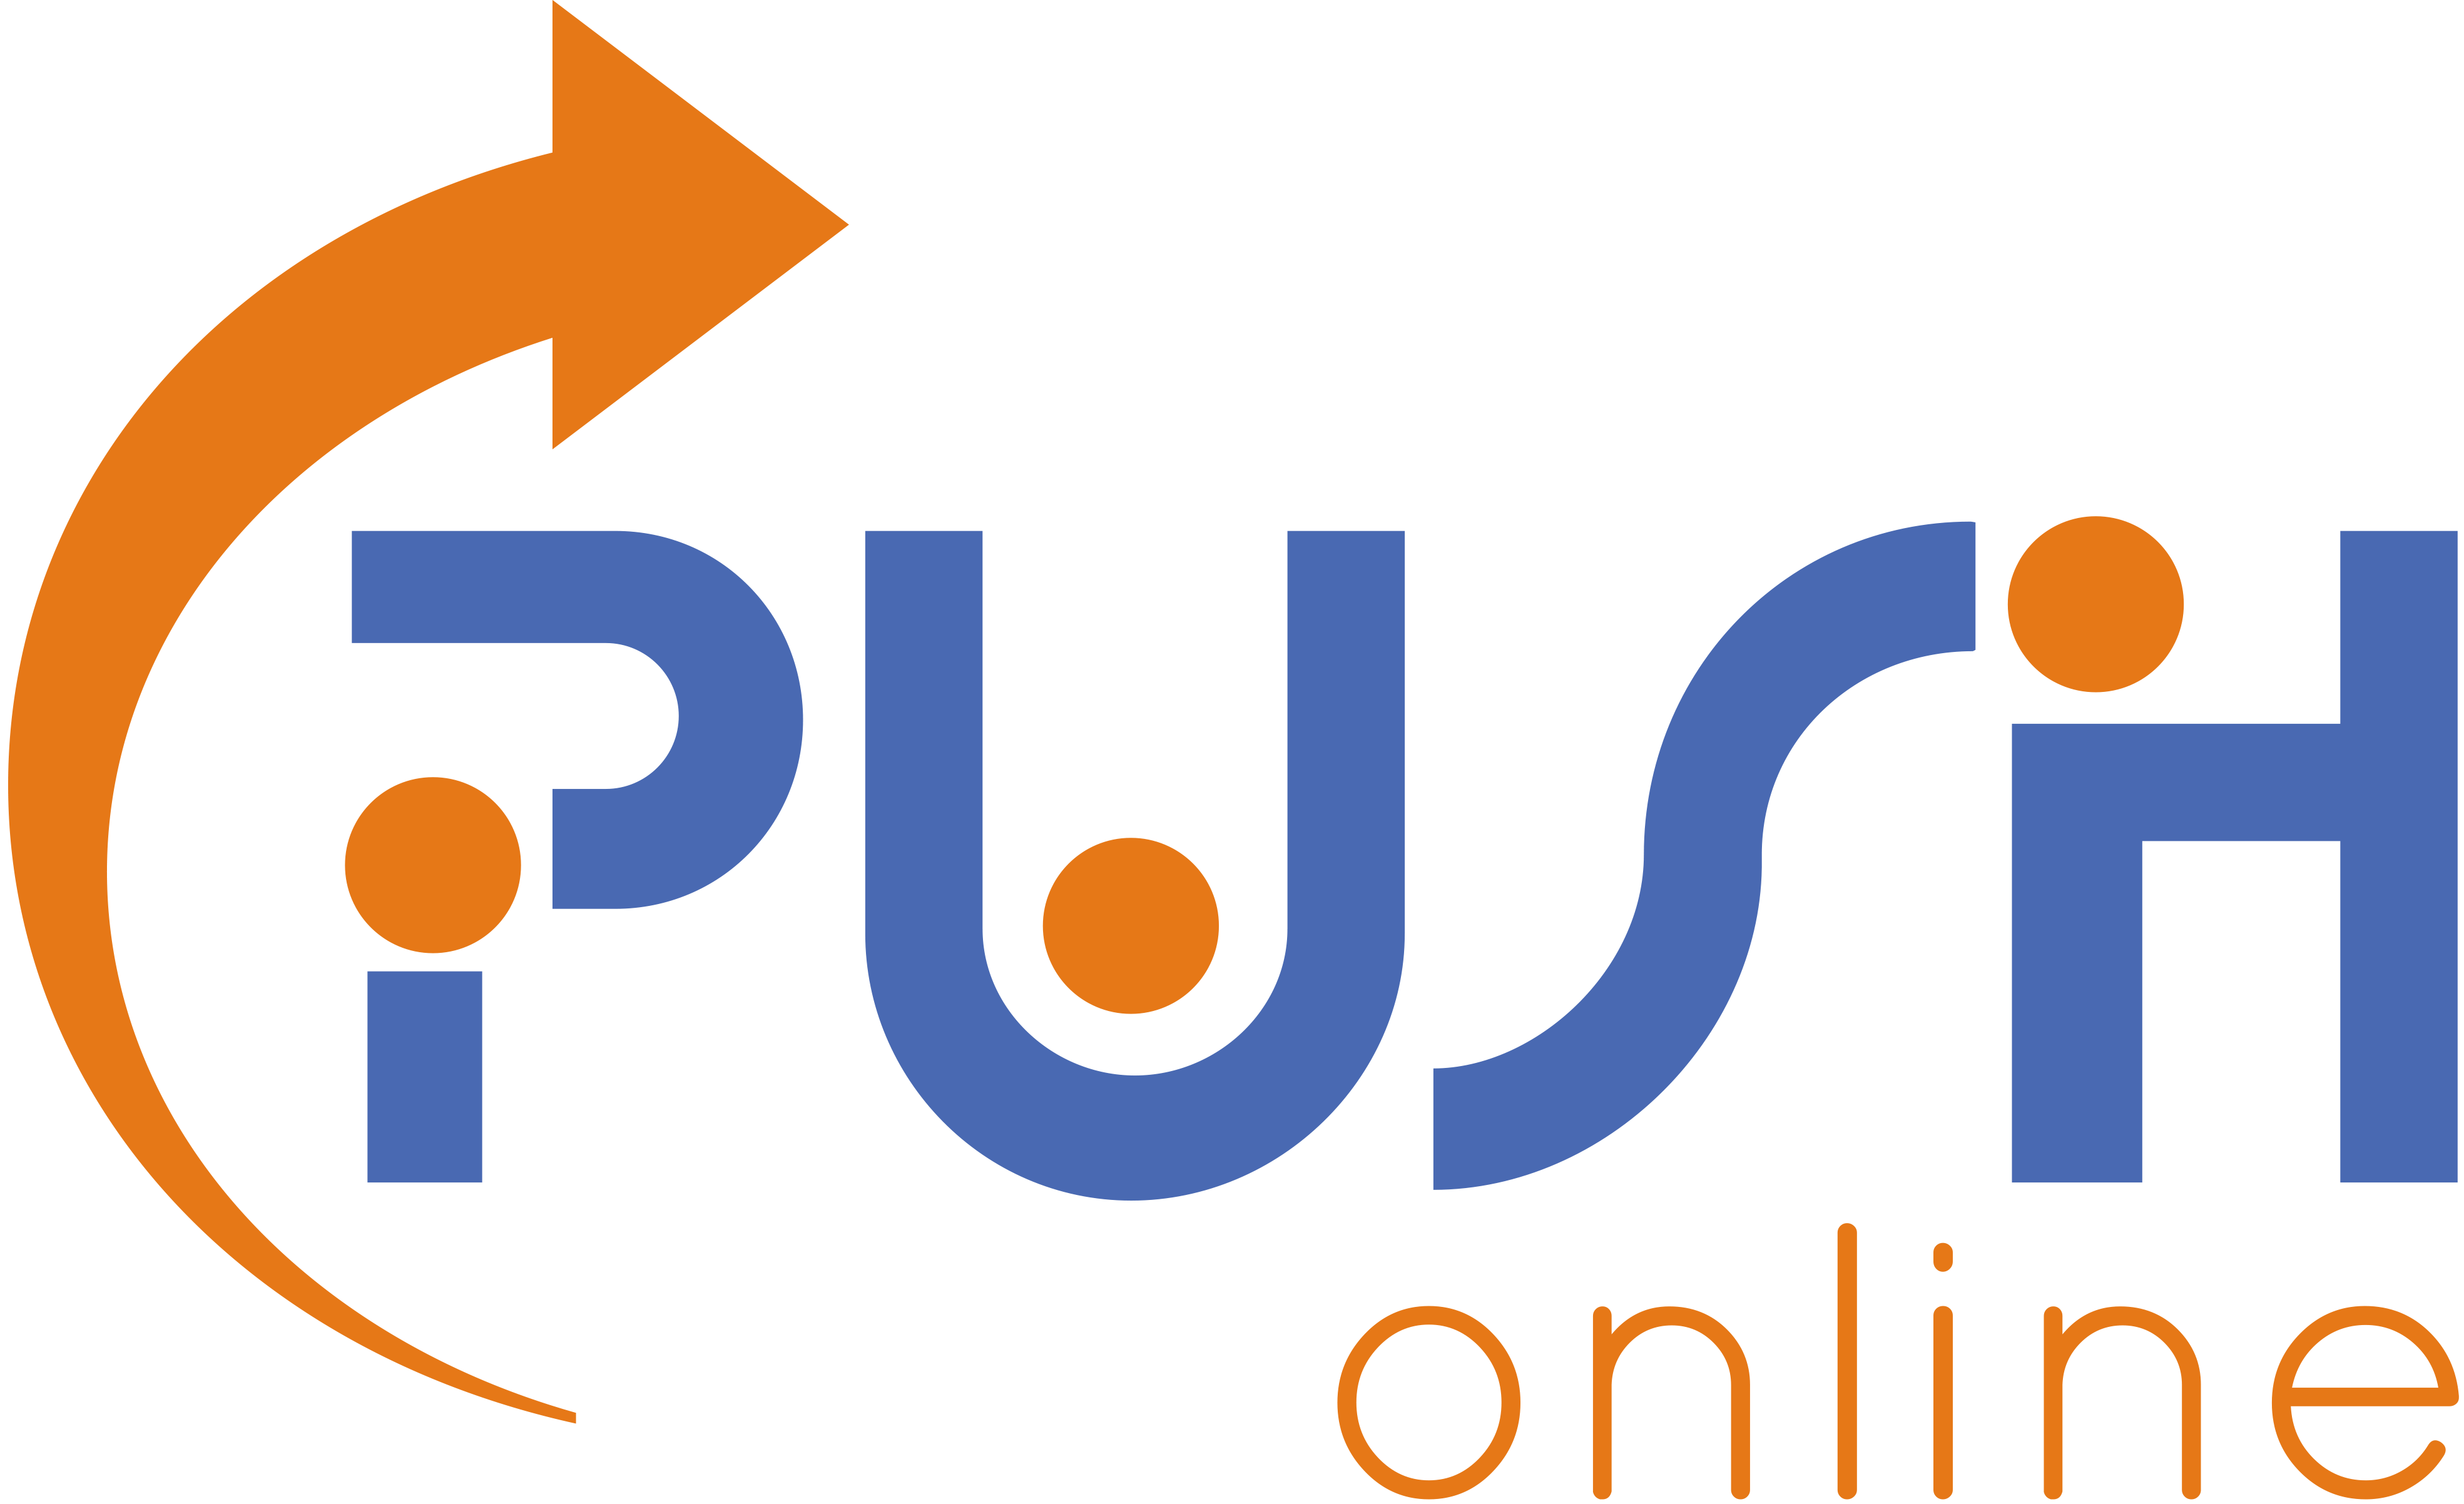 Push Online